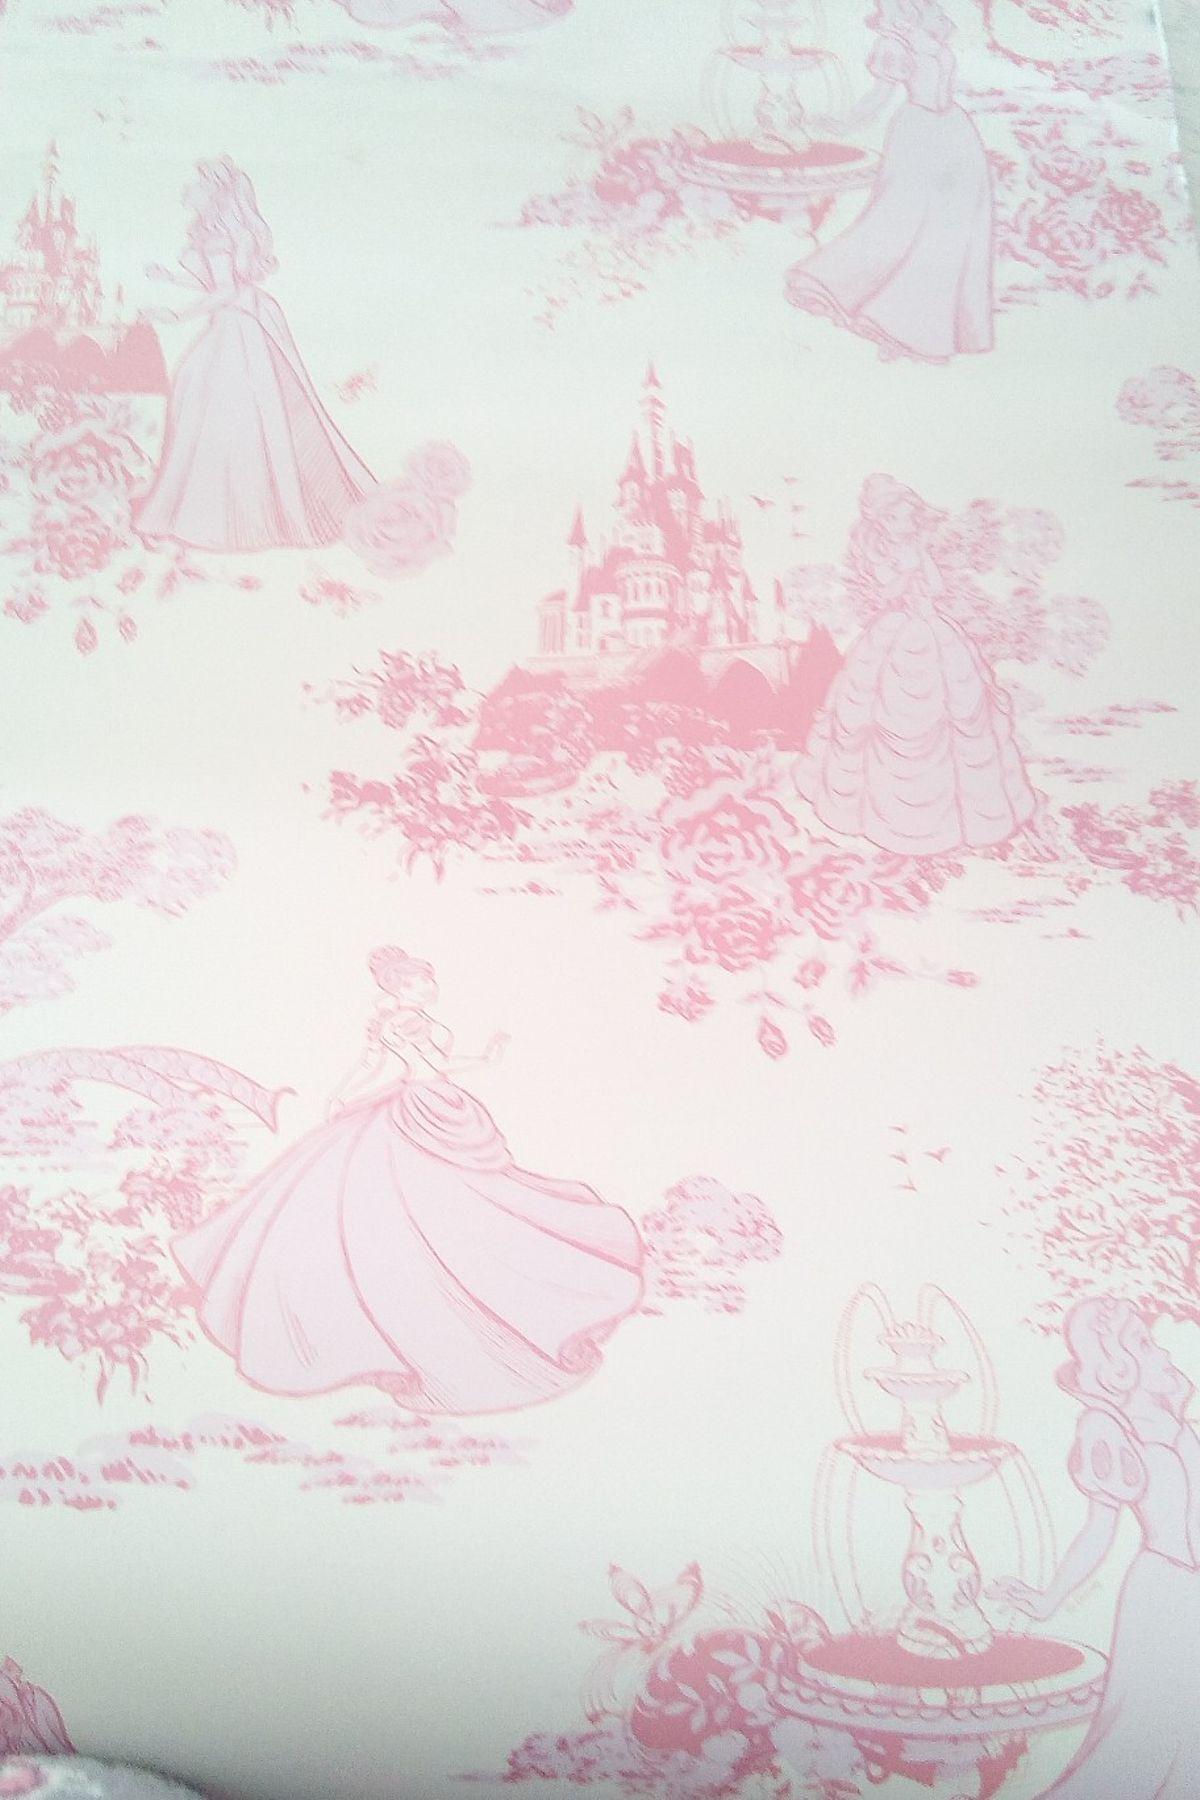 Disney Princess Pink Wallpaper